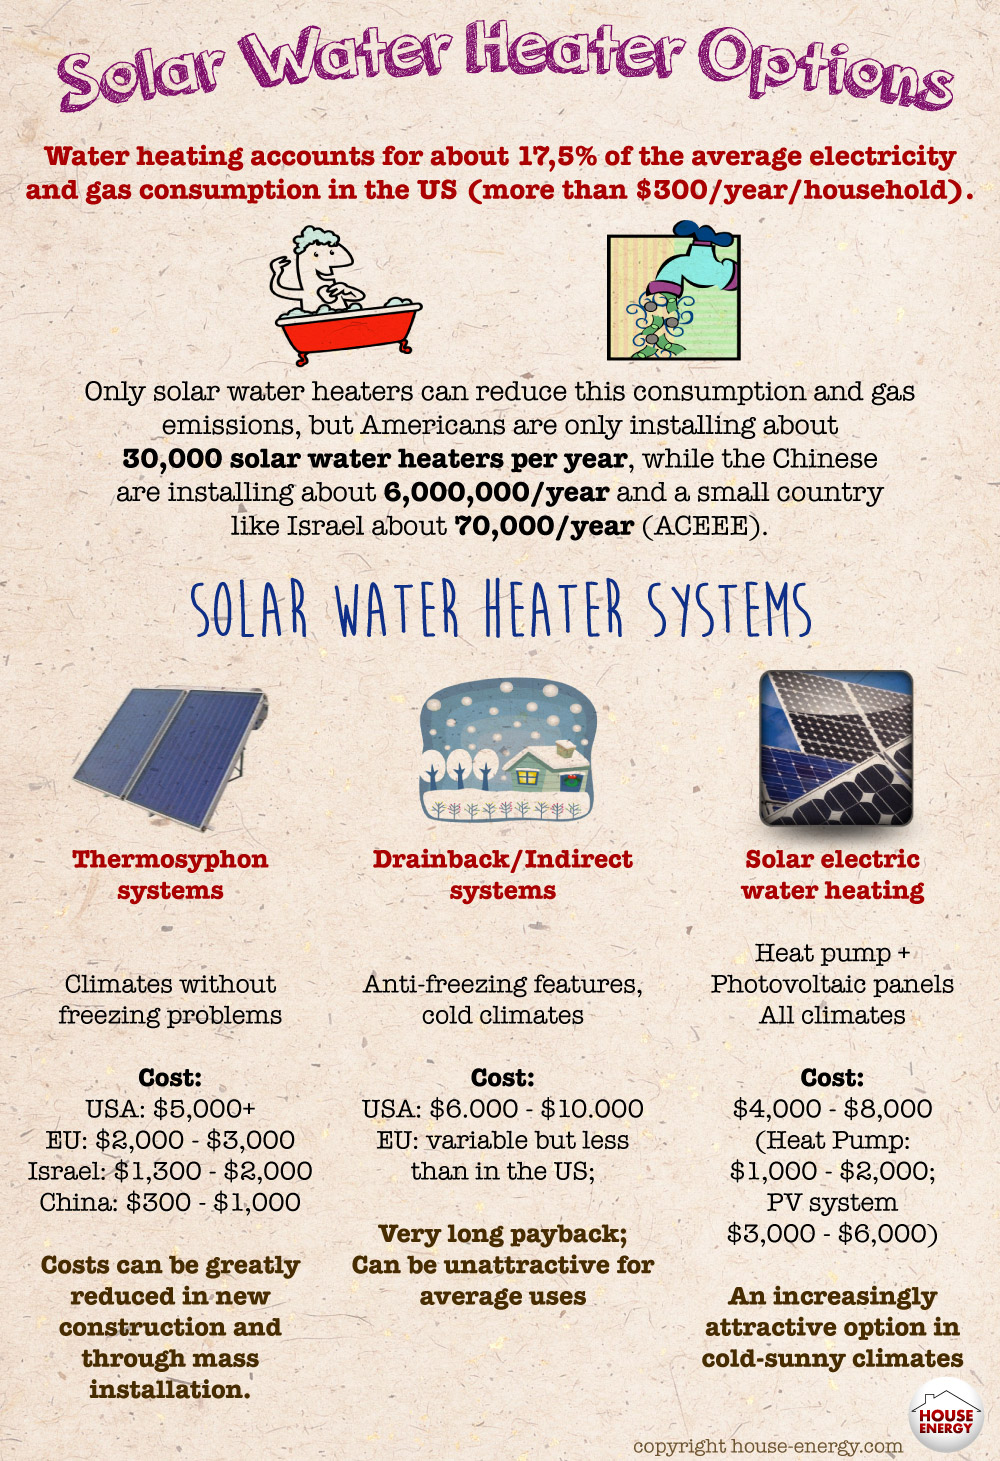 Solar water heater options